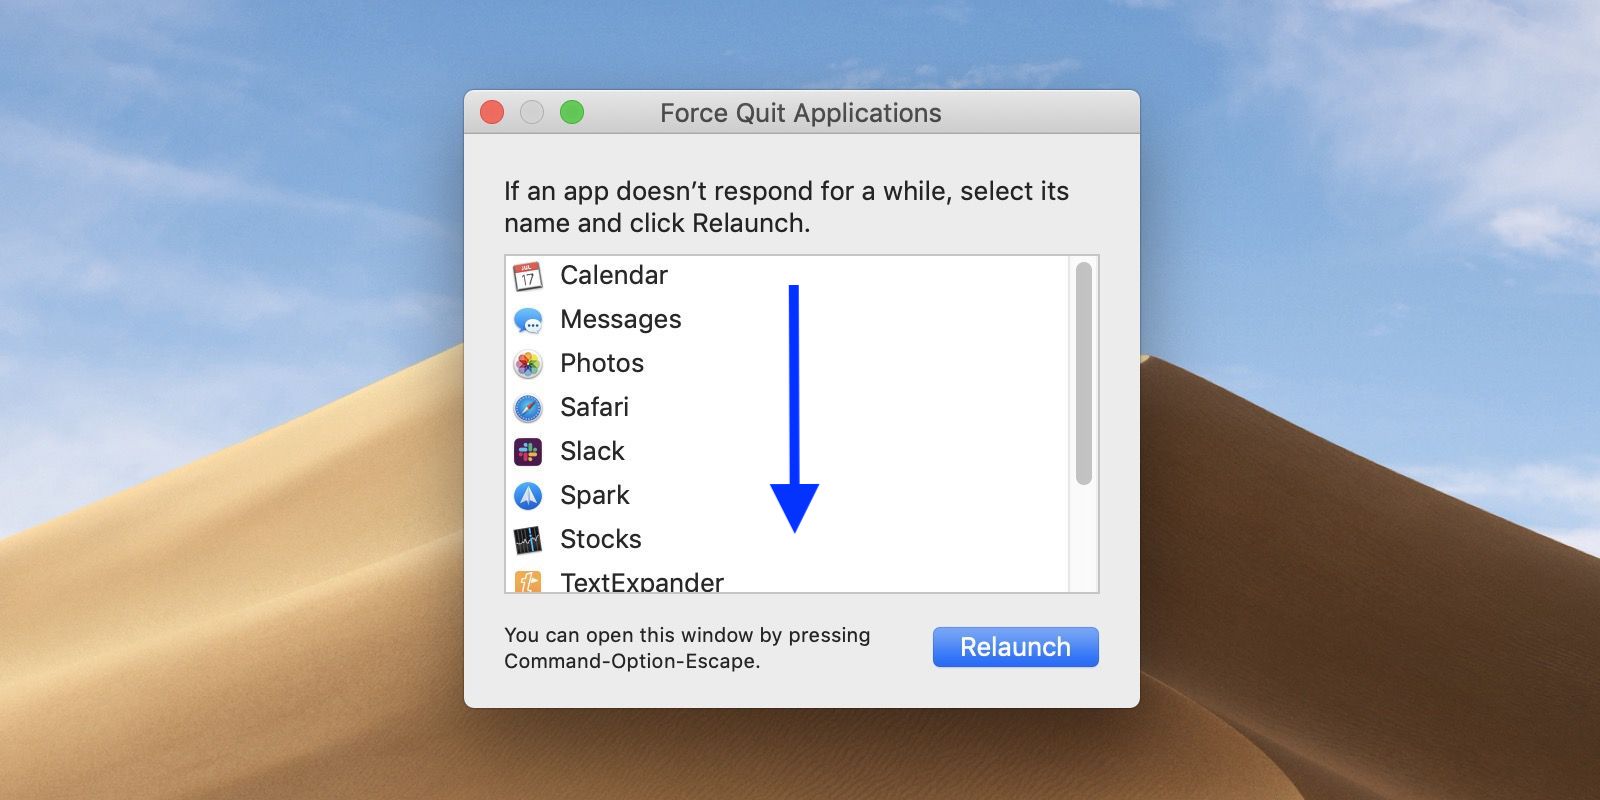 mac restart finder process